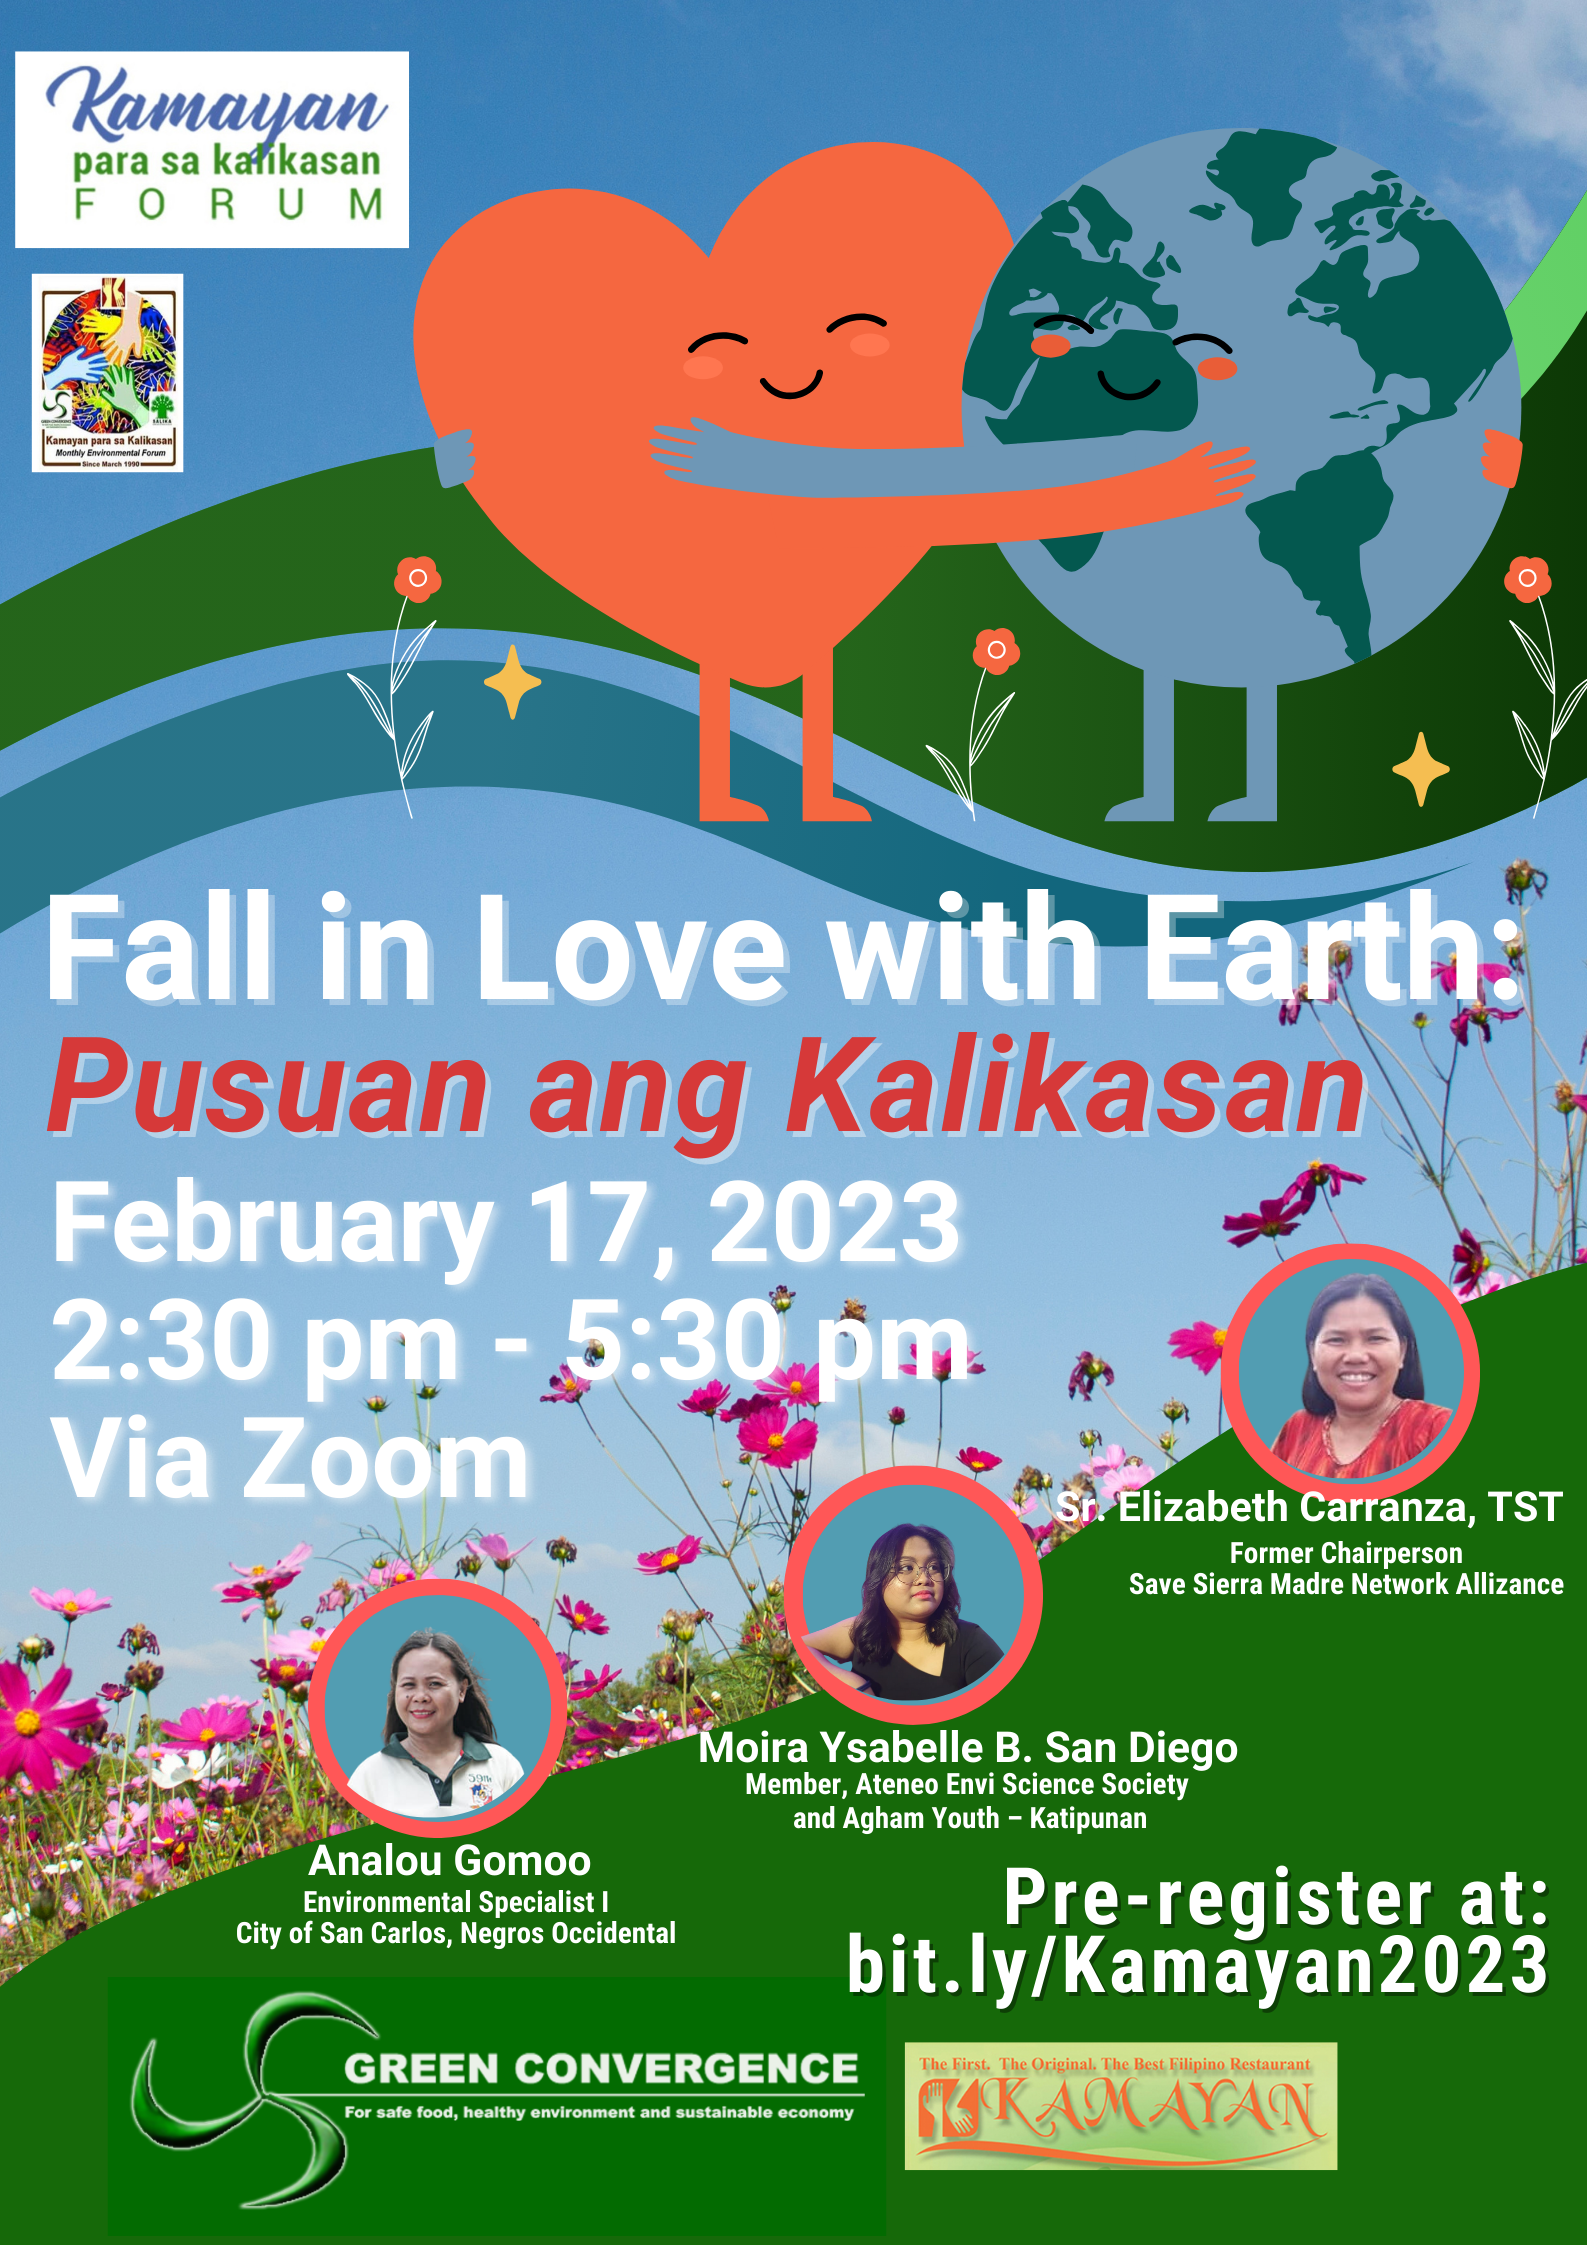 Fall in Love with Earth: "Pusuan ang Kalikasan"